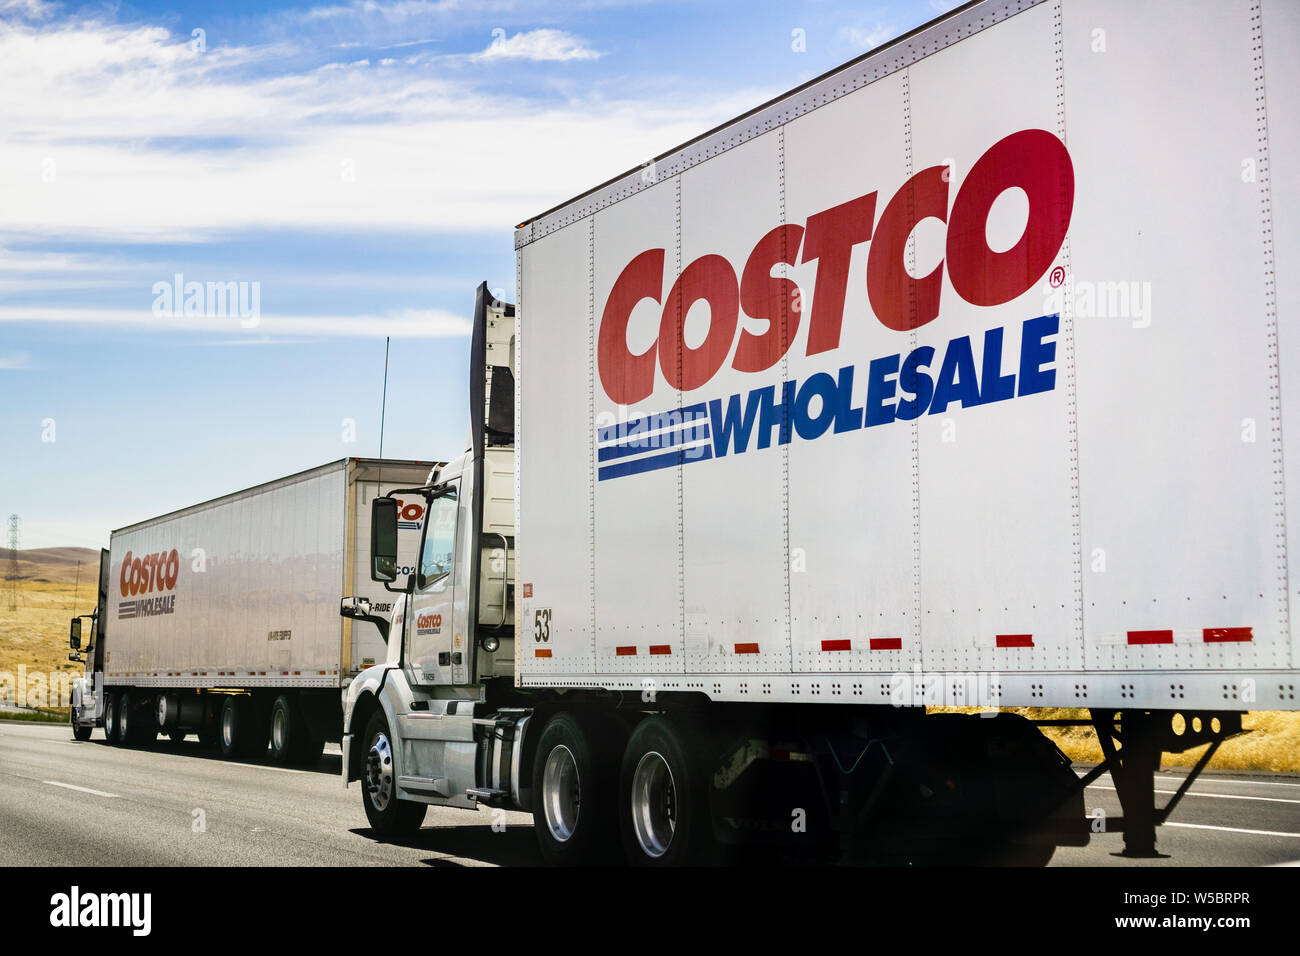 June 28, 2019 Stockton / CA / USA - Branded Costco Wholesale trucks driving on the freeway Stock Photo